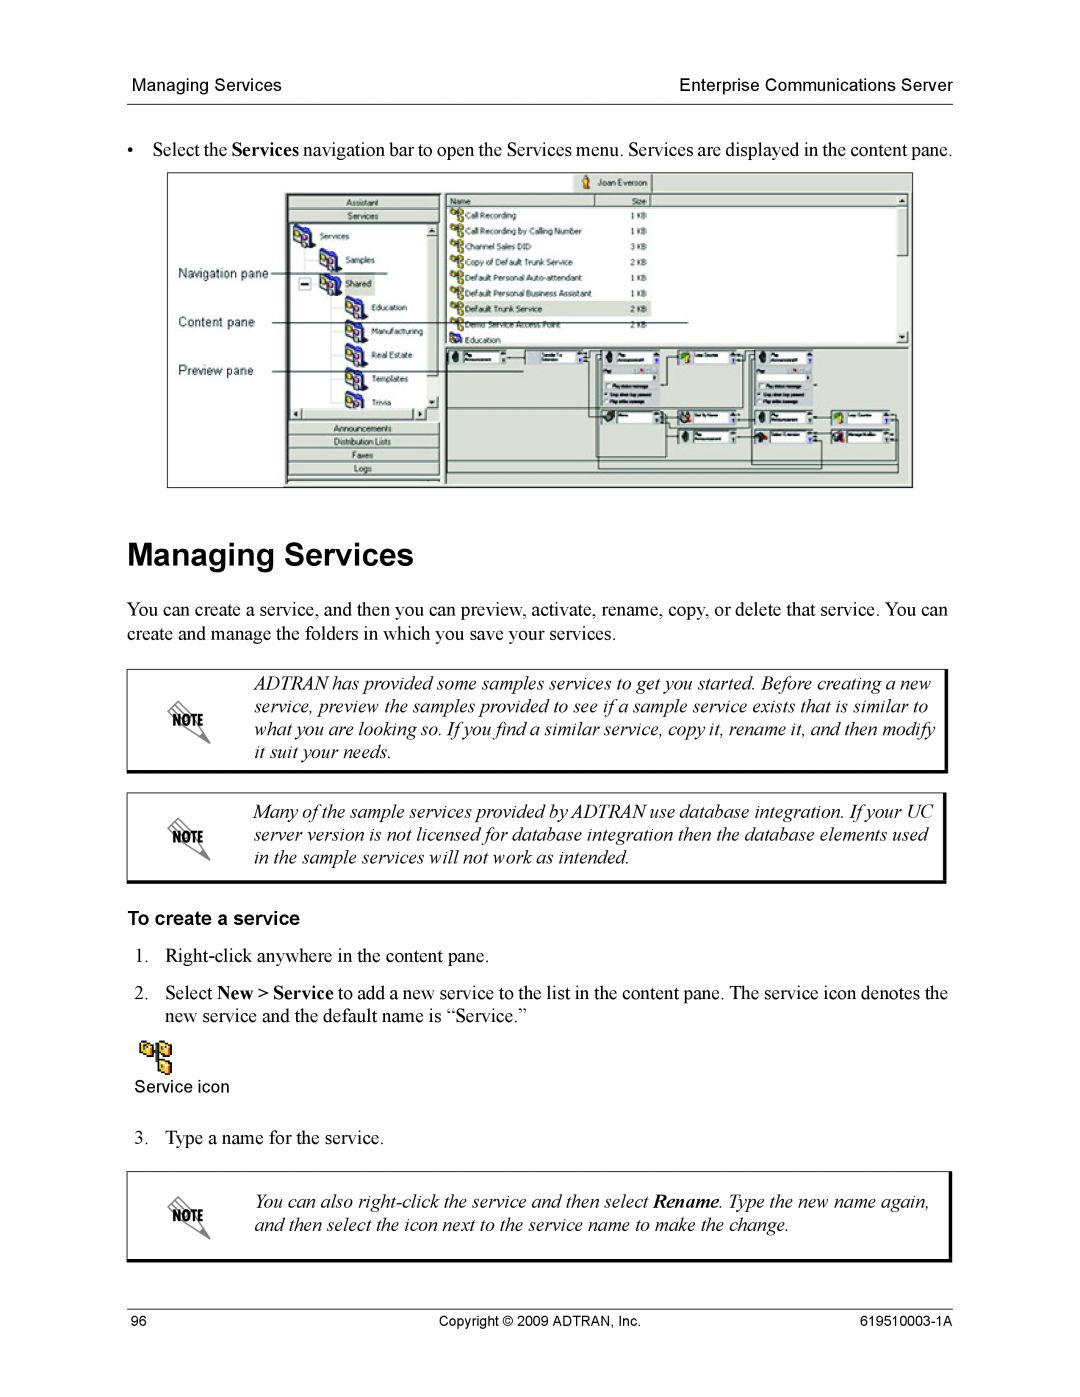 ADTRAN 619510003-1A manual Managing Services, To create a service 